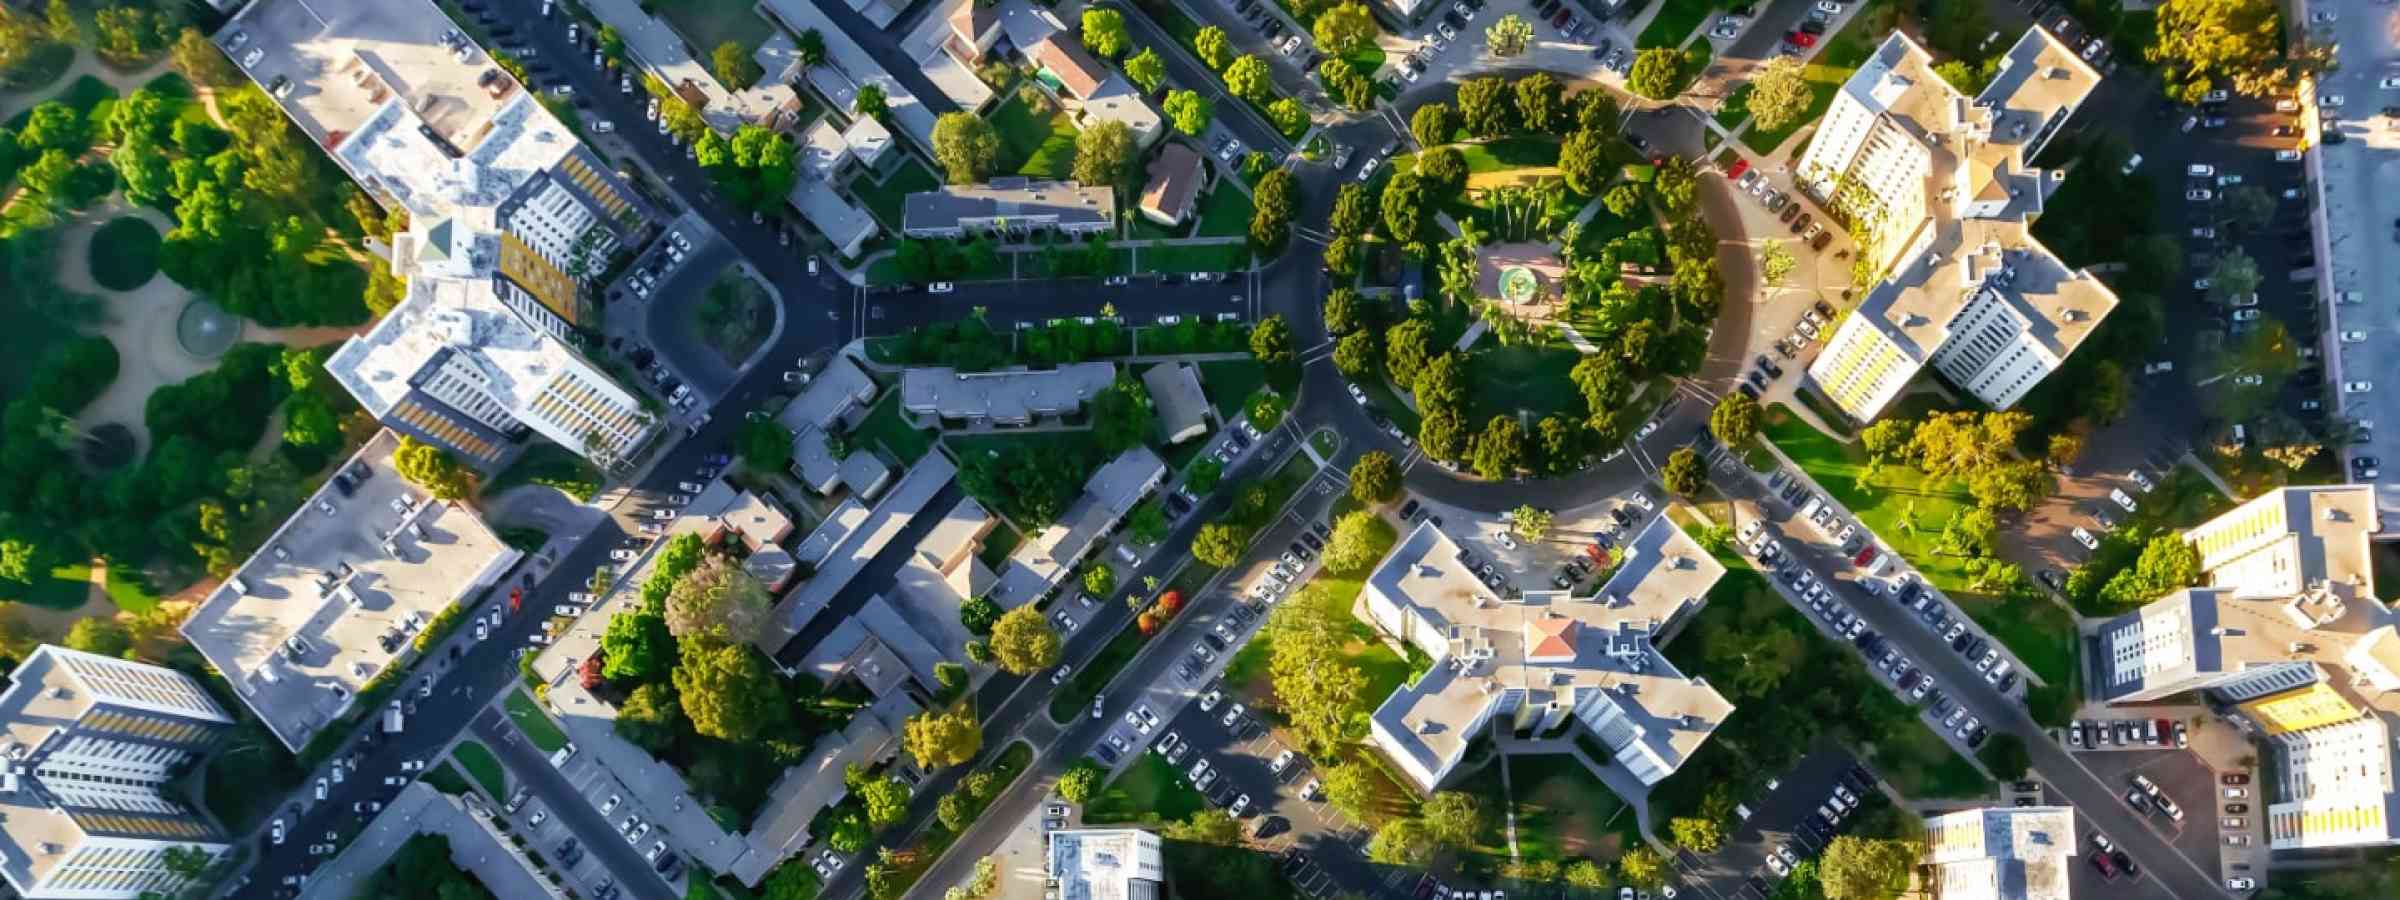 Aerial view of buildings near Wilshire Blvd in Westwood, Los Angeles, CA